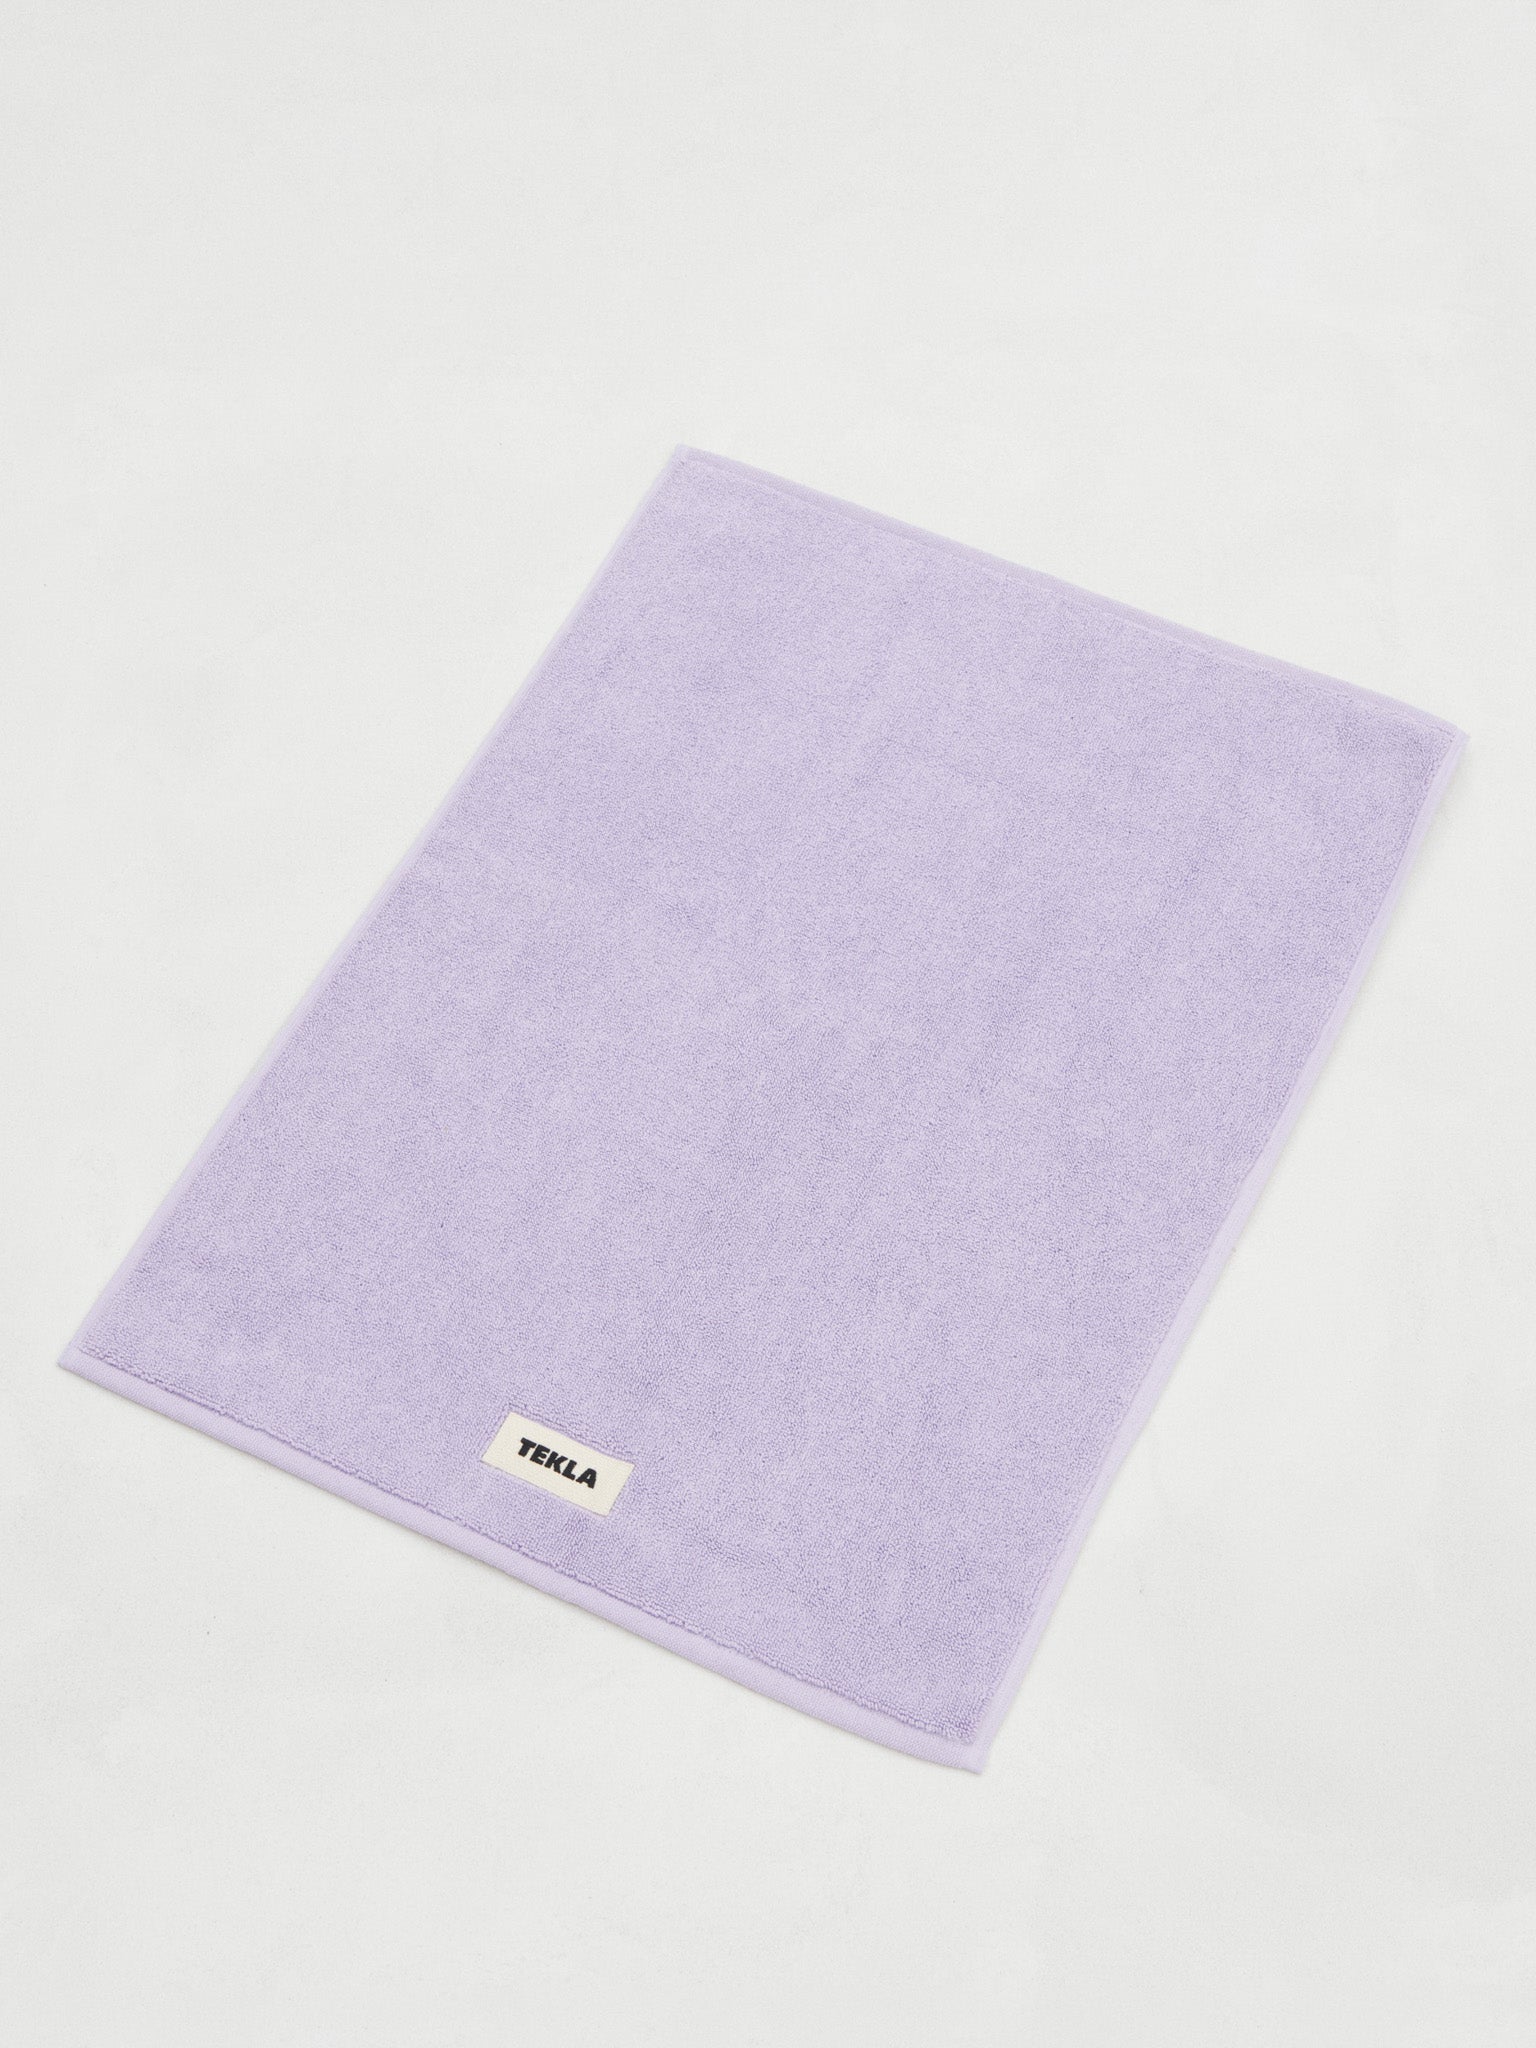 Tekla - Bath Mat in Lavender